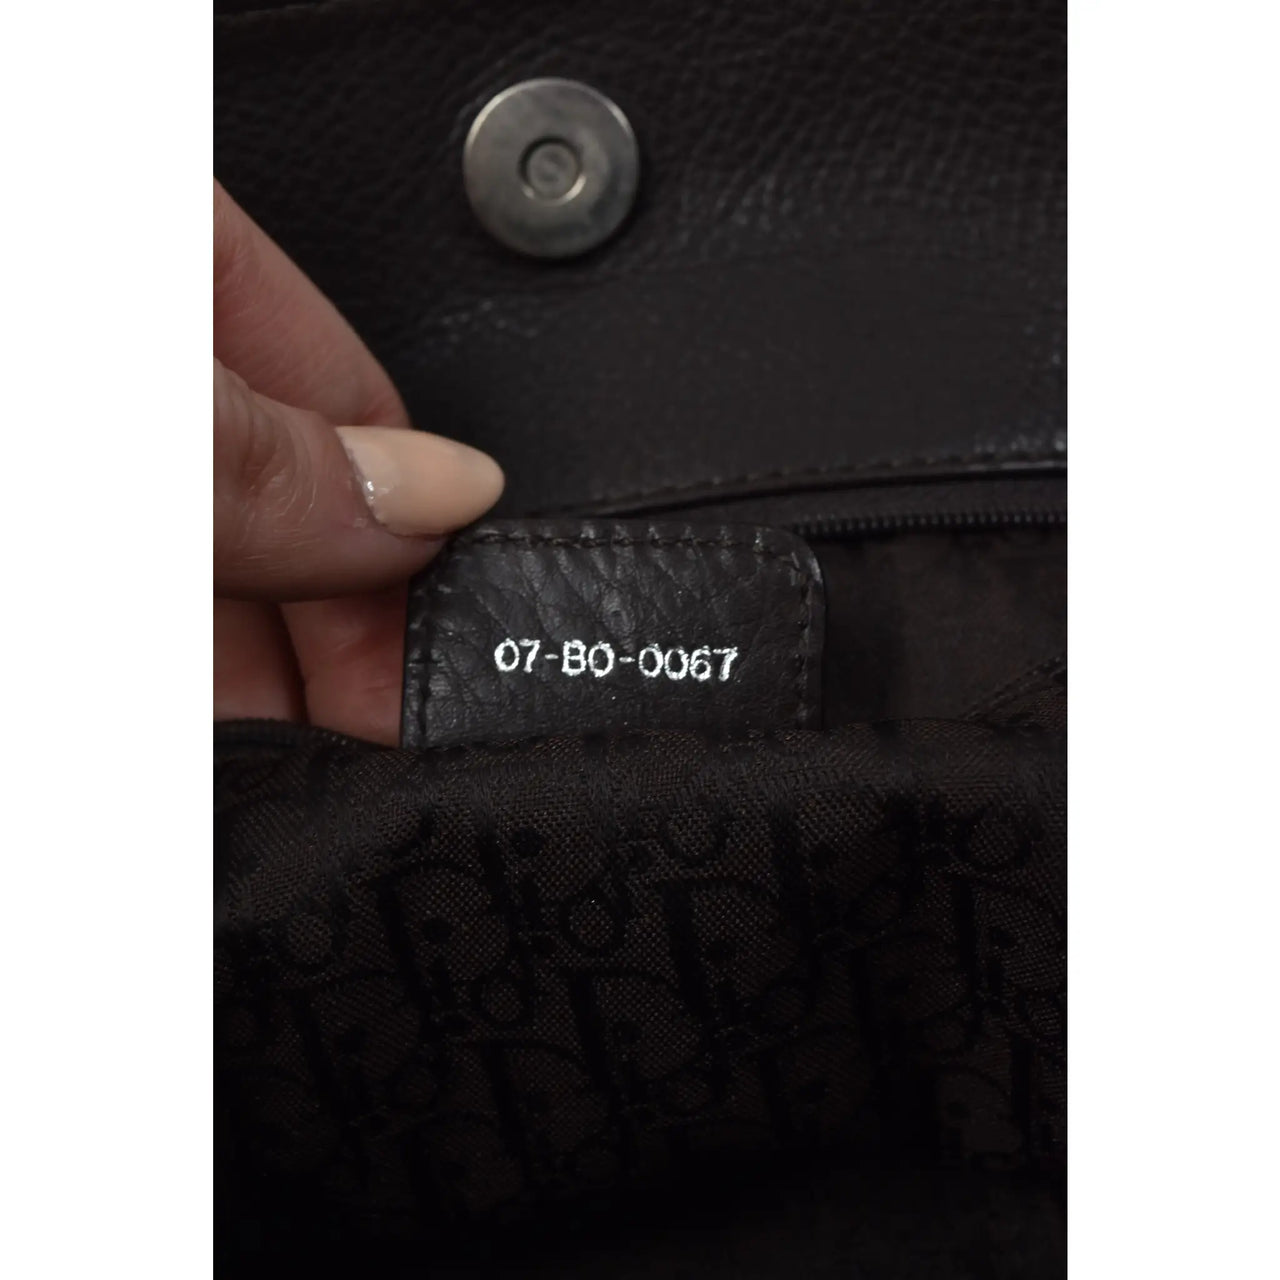 Dior Dior Black leather D charm pochette bag